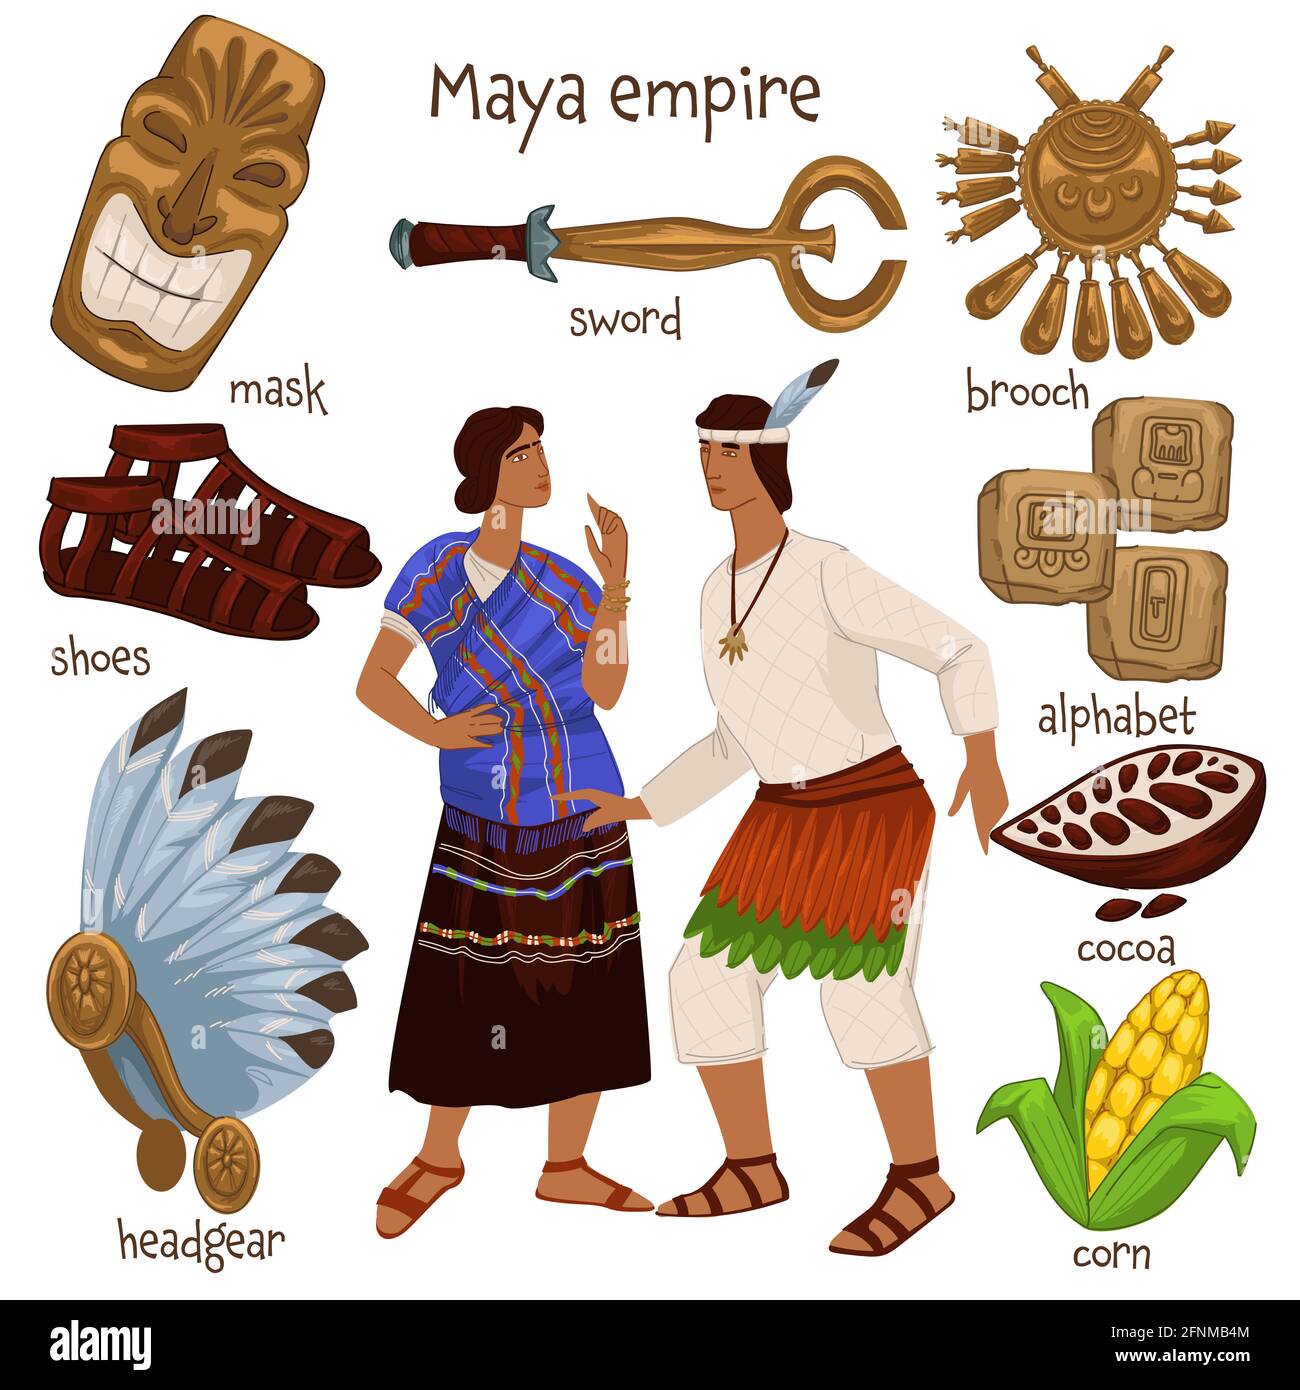 Maya empire, people and personal belongings vector Stock Vector